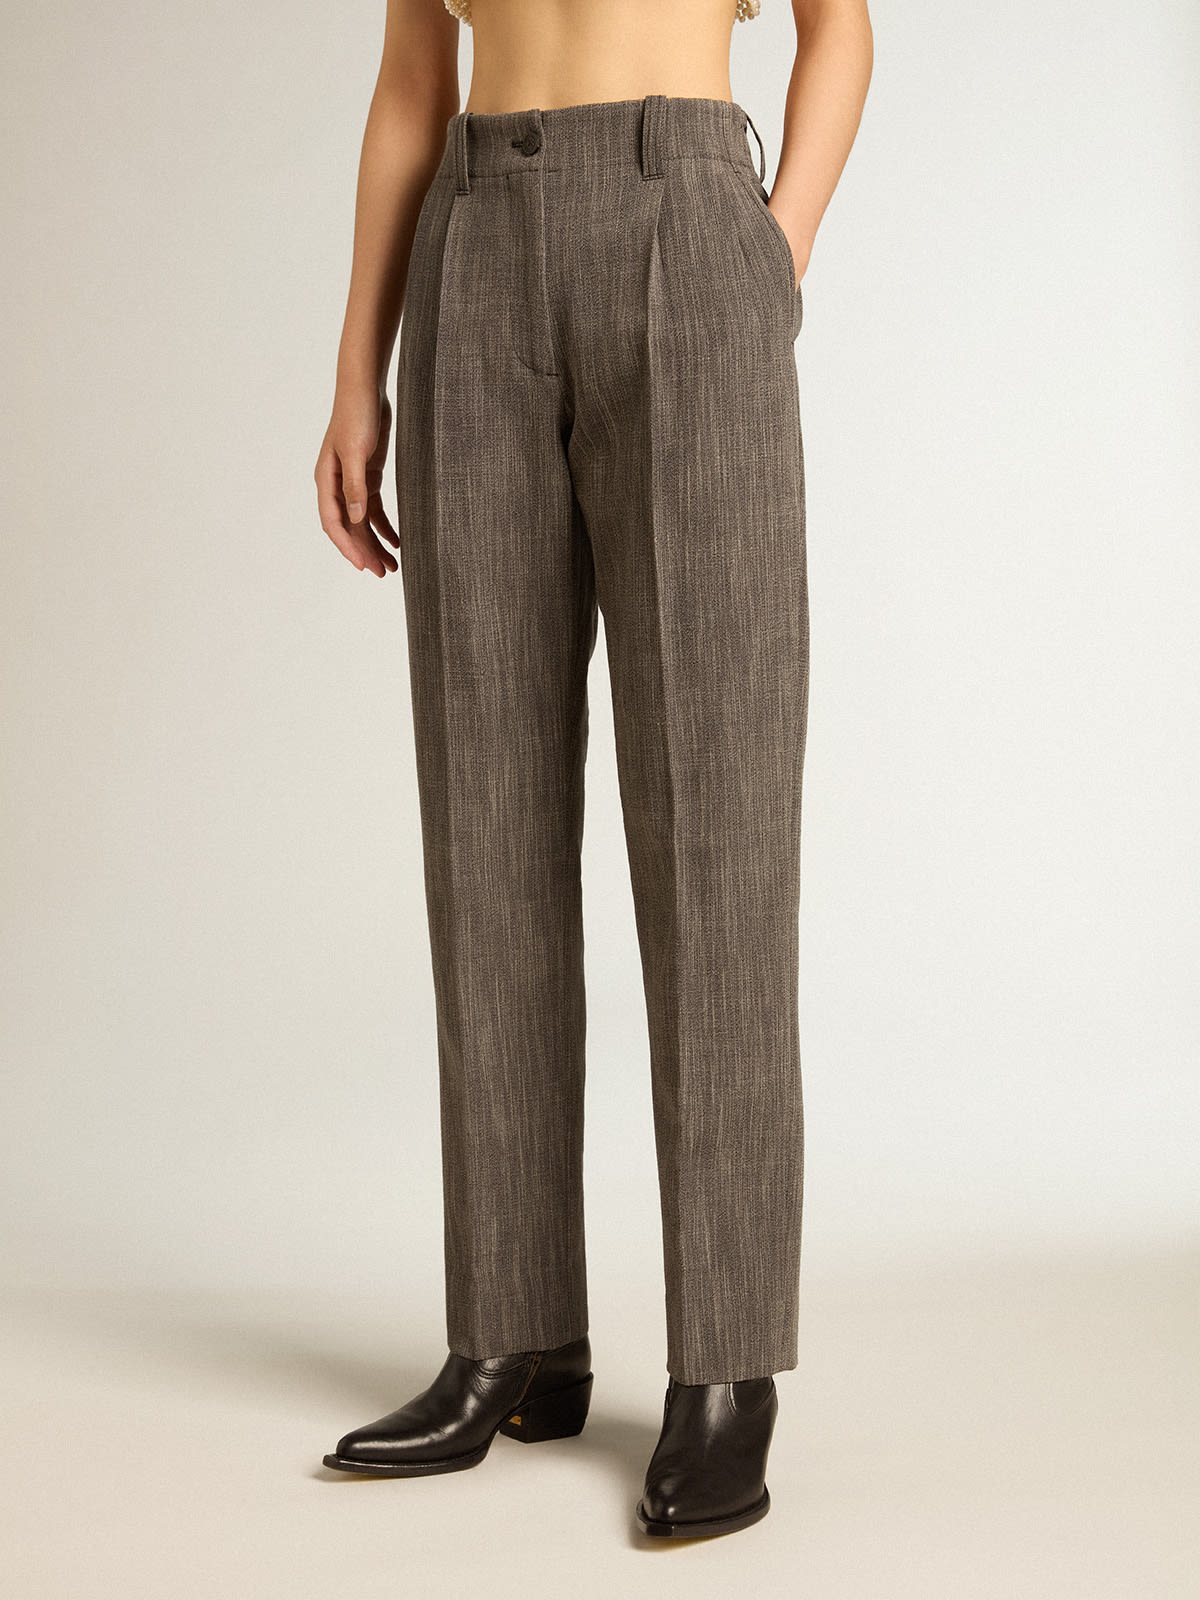 Golden Goose - Women’s high-waisted pants in gray melange wool blend in 